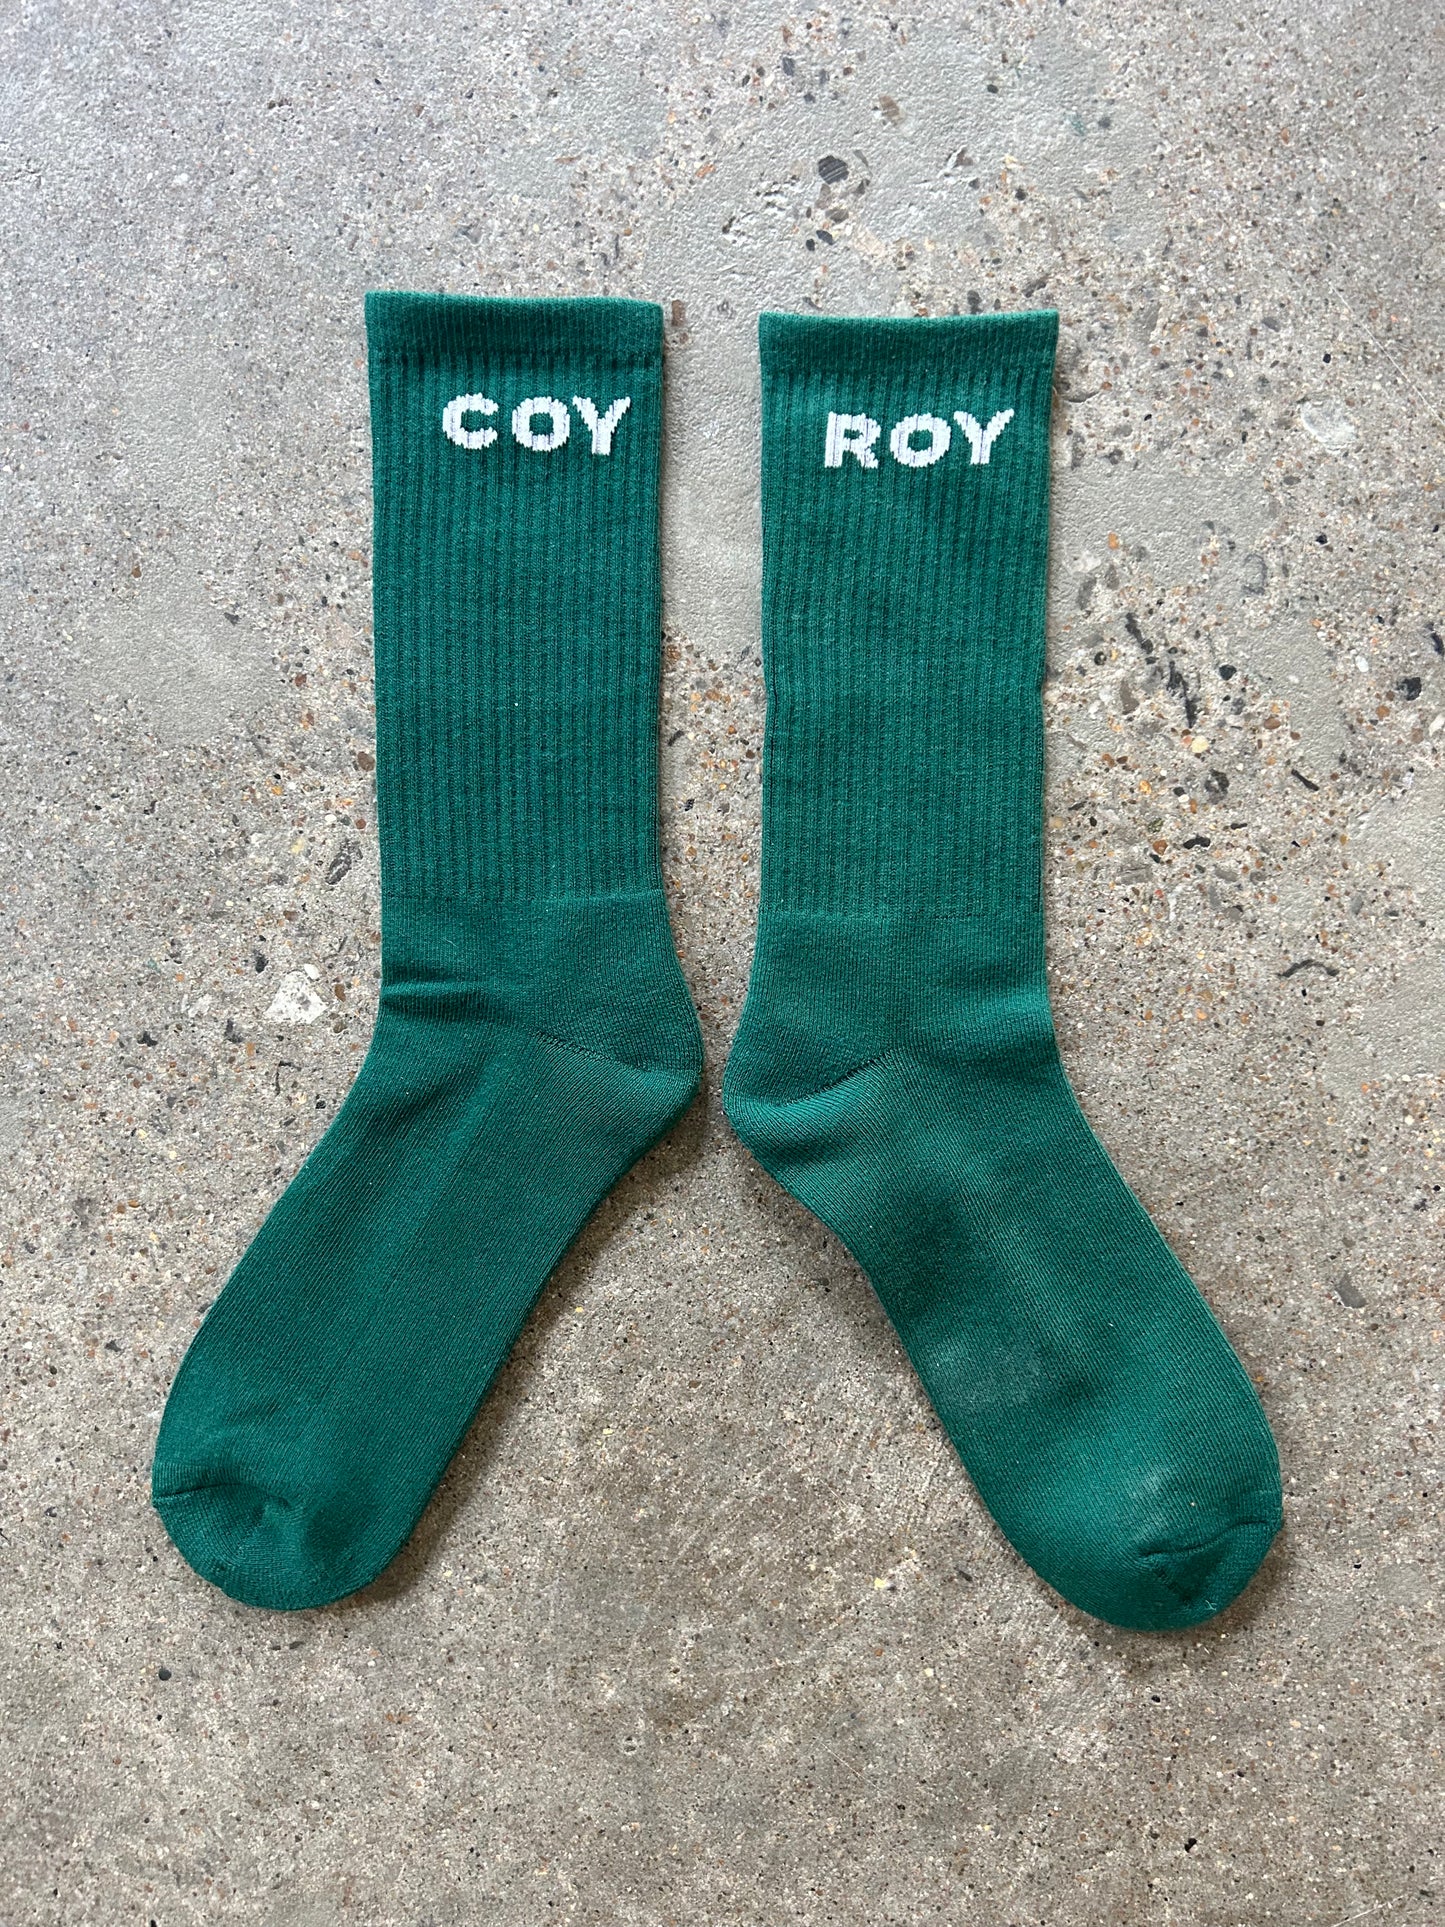 Coy Roy Rocks "Green" Socks